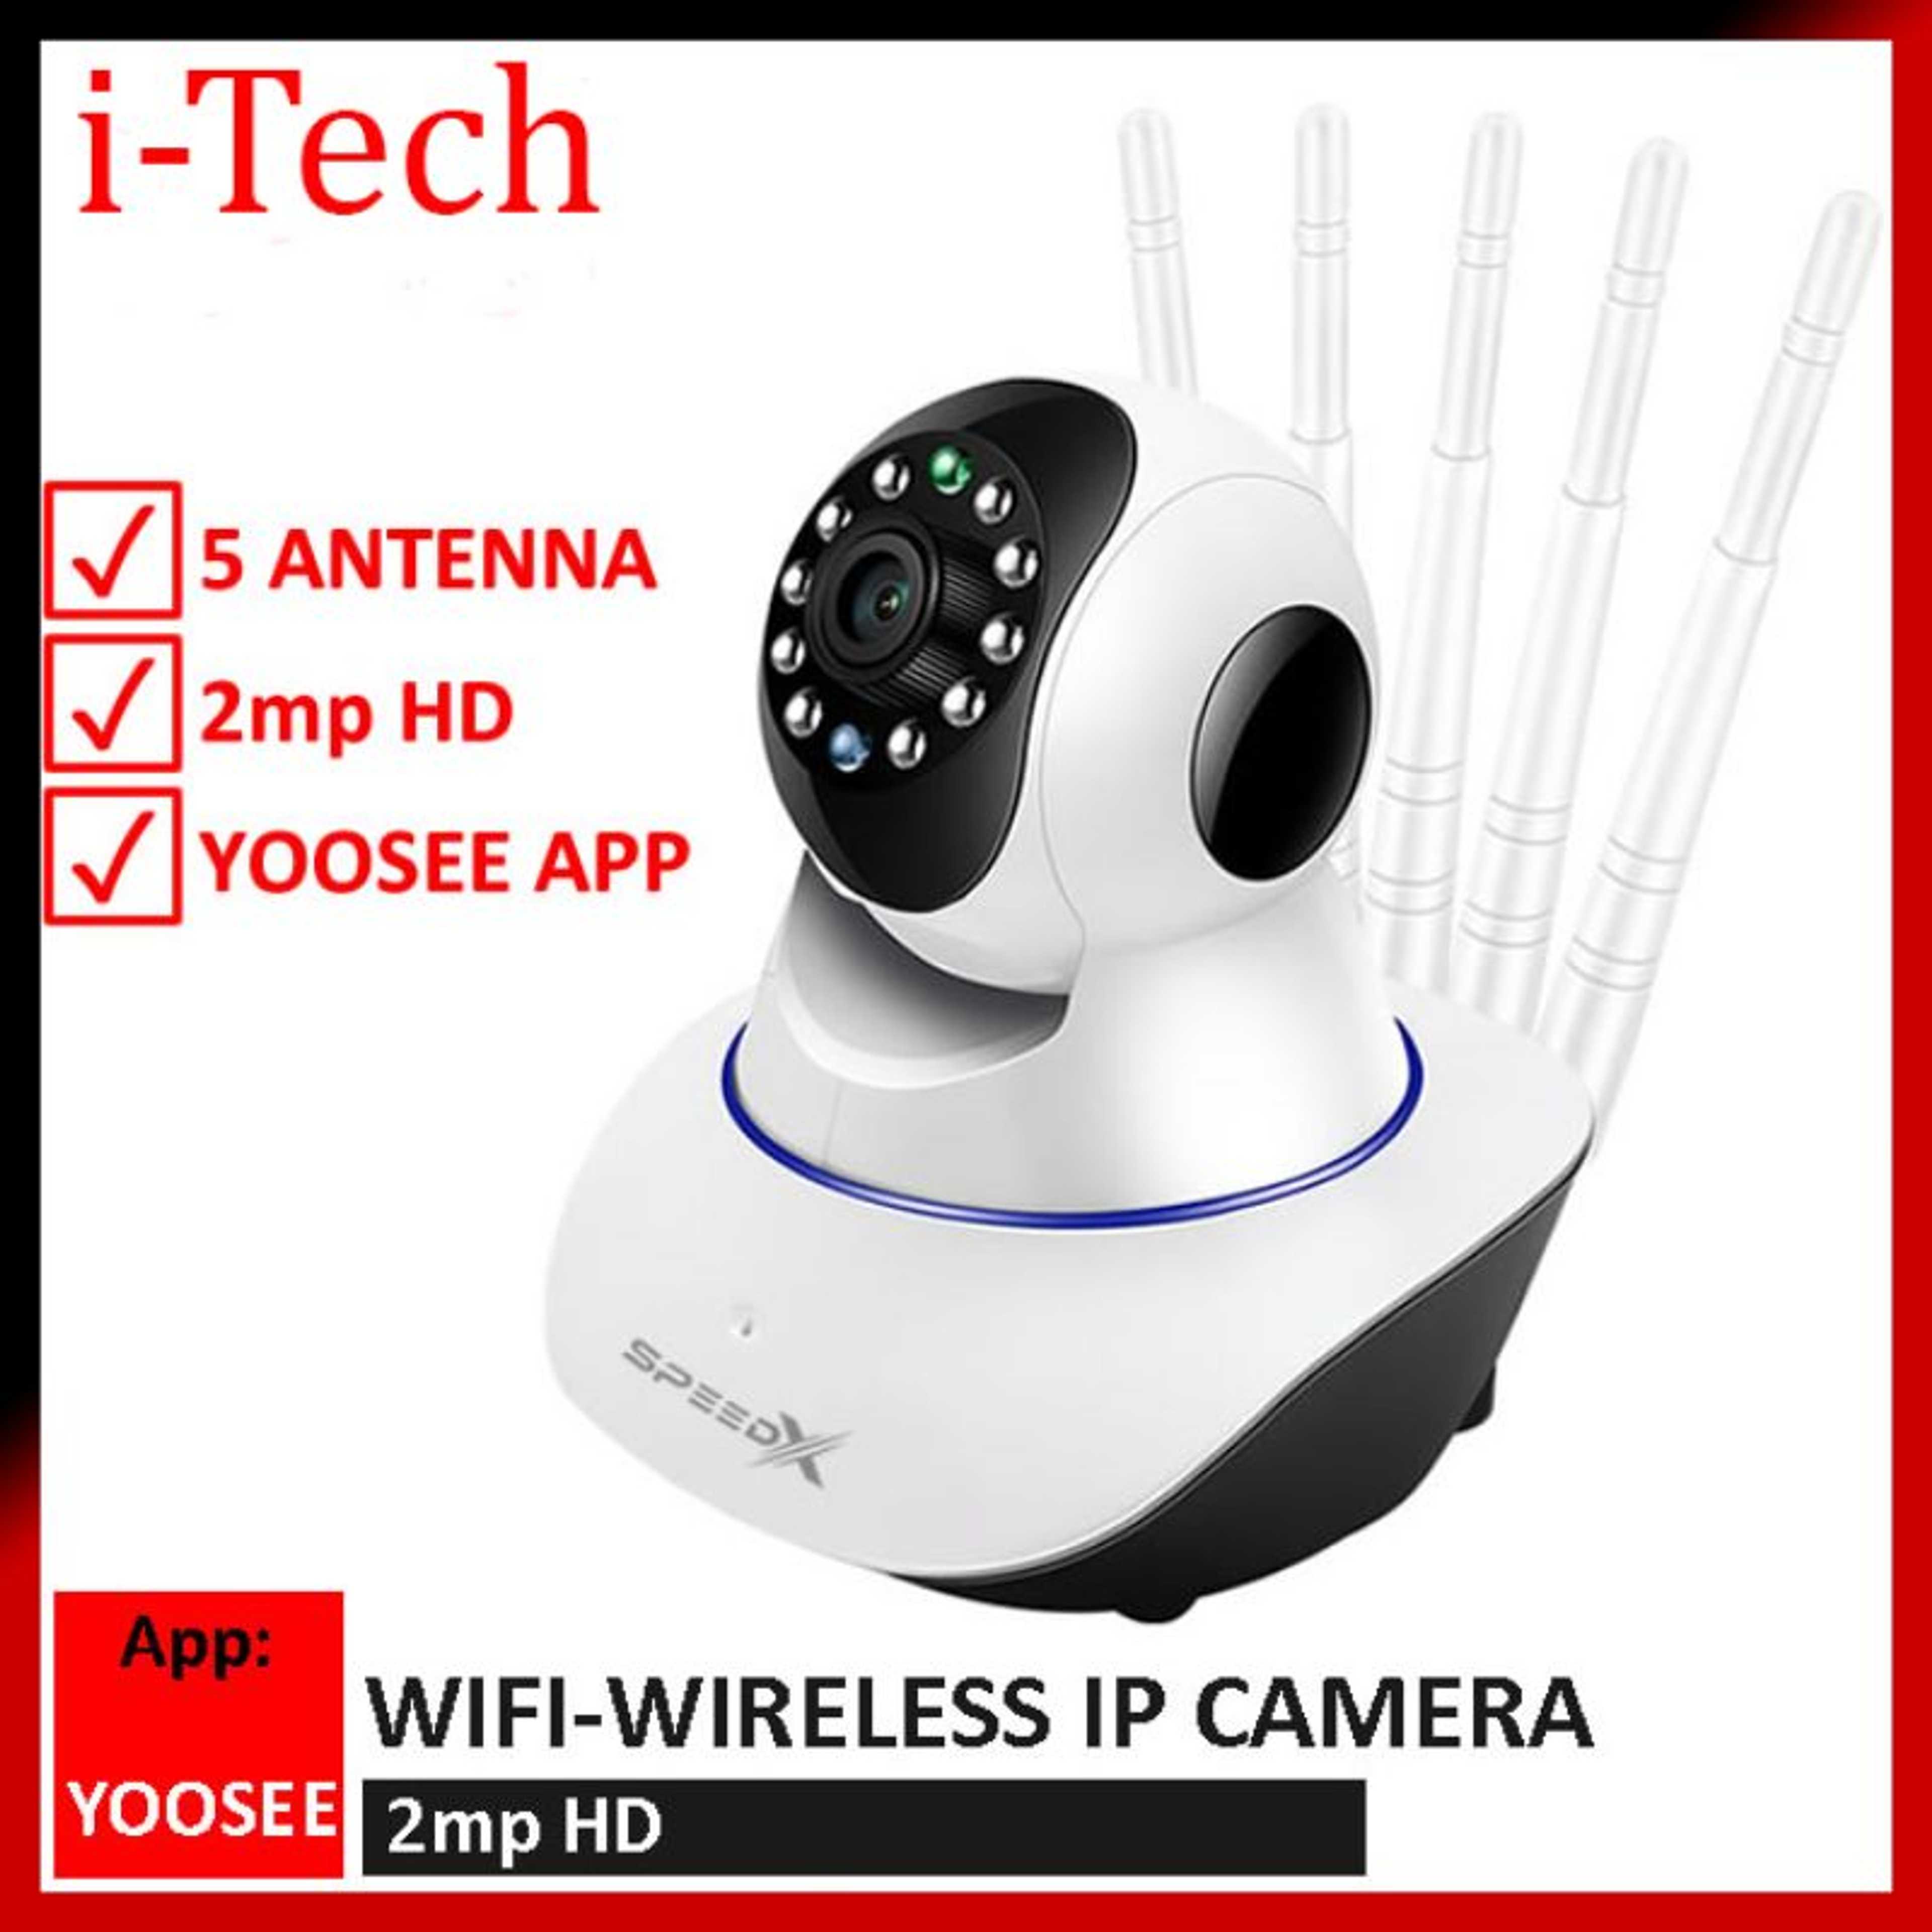 Yoosee Color Night Vision Camera 5 Antenna 2mp 1080p Full Hd - Wireless Bluetooth Camera.